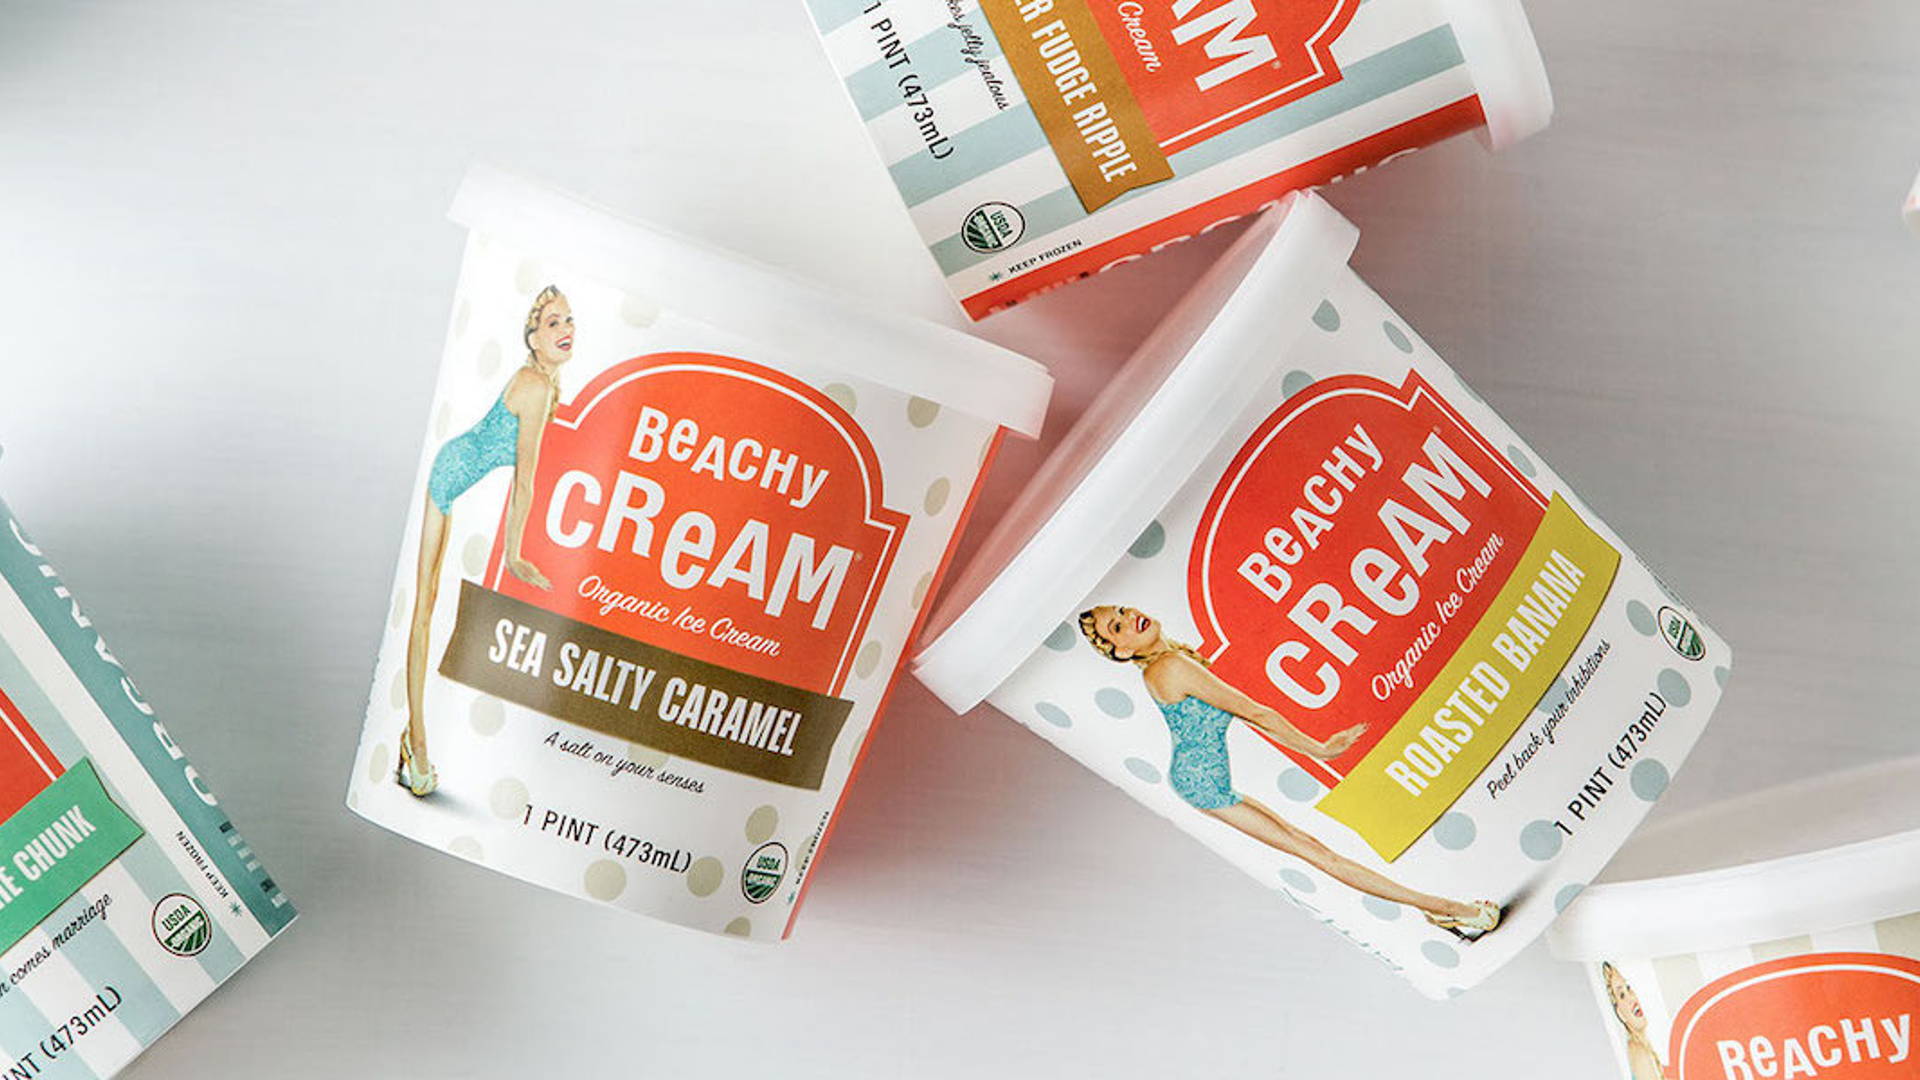 Featured image for Beachy Cream Organic Ice Cream Pints